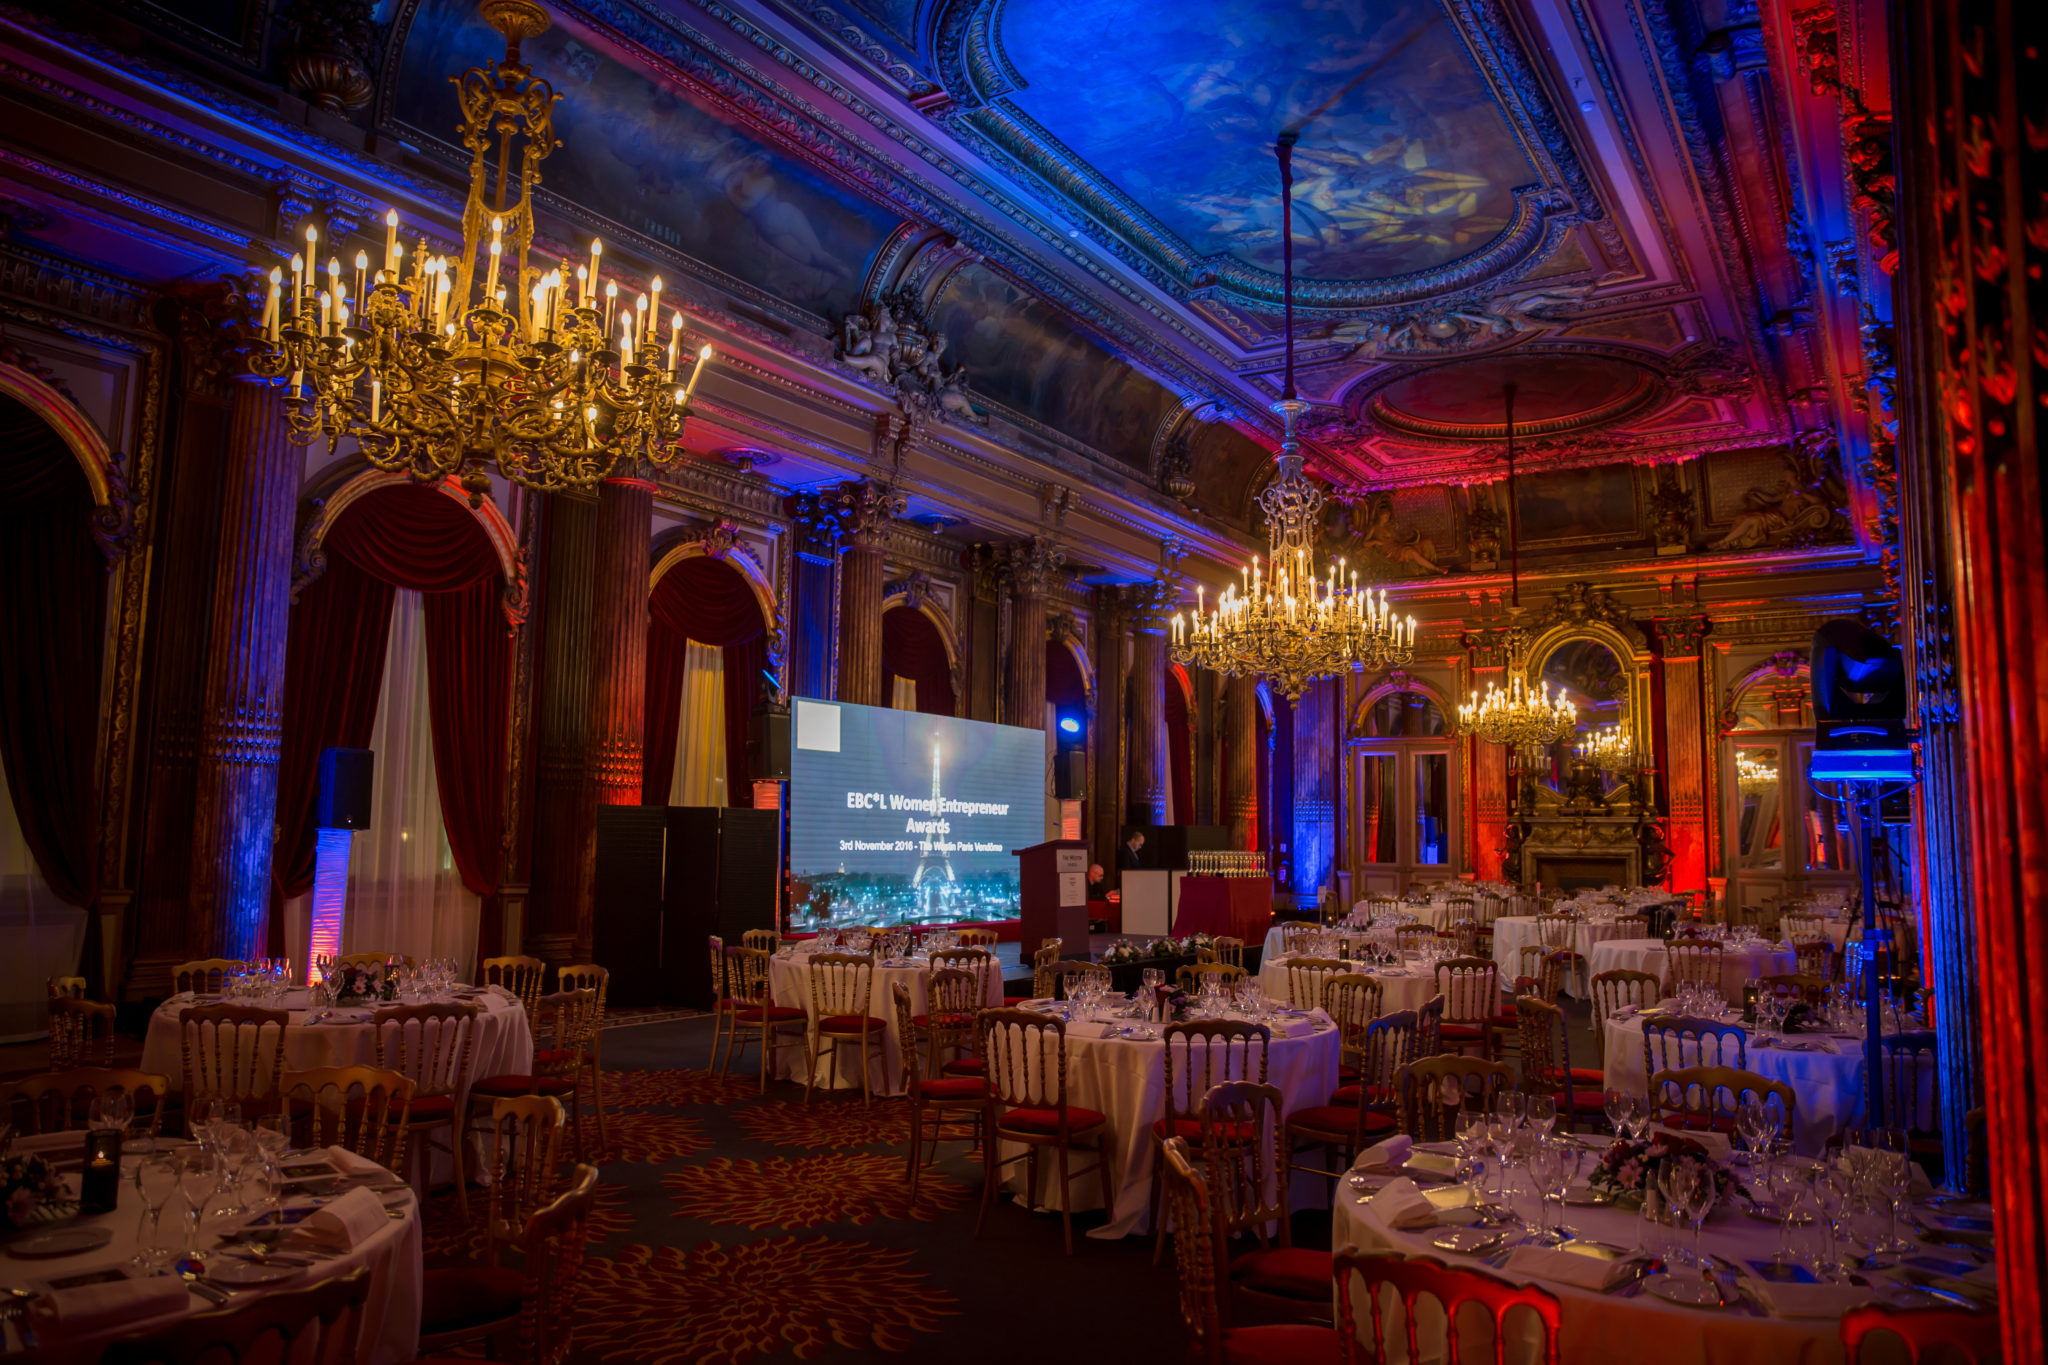 Gala Dinner in Paris - The French DMC